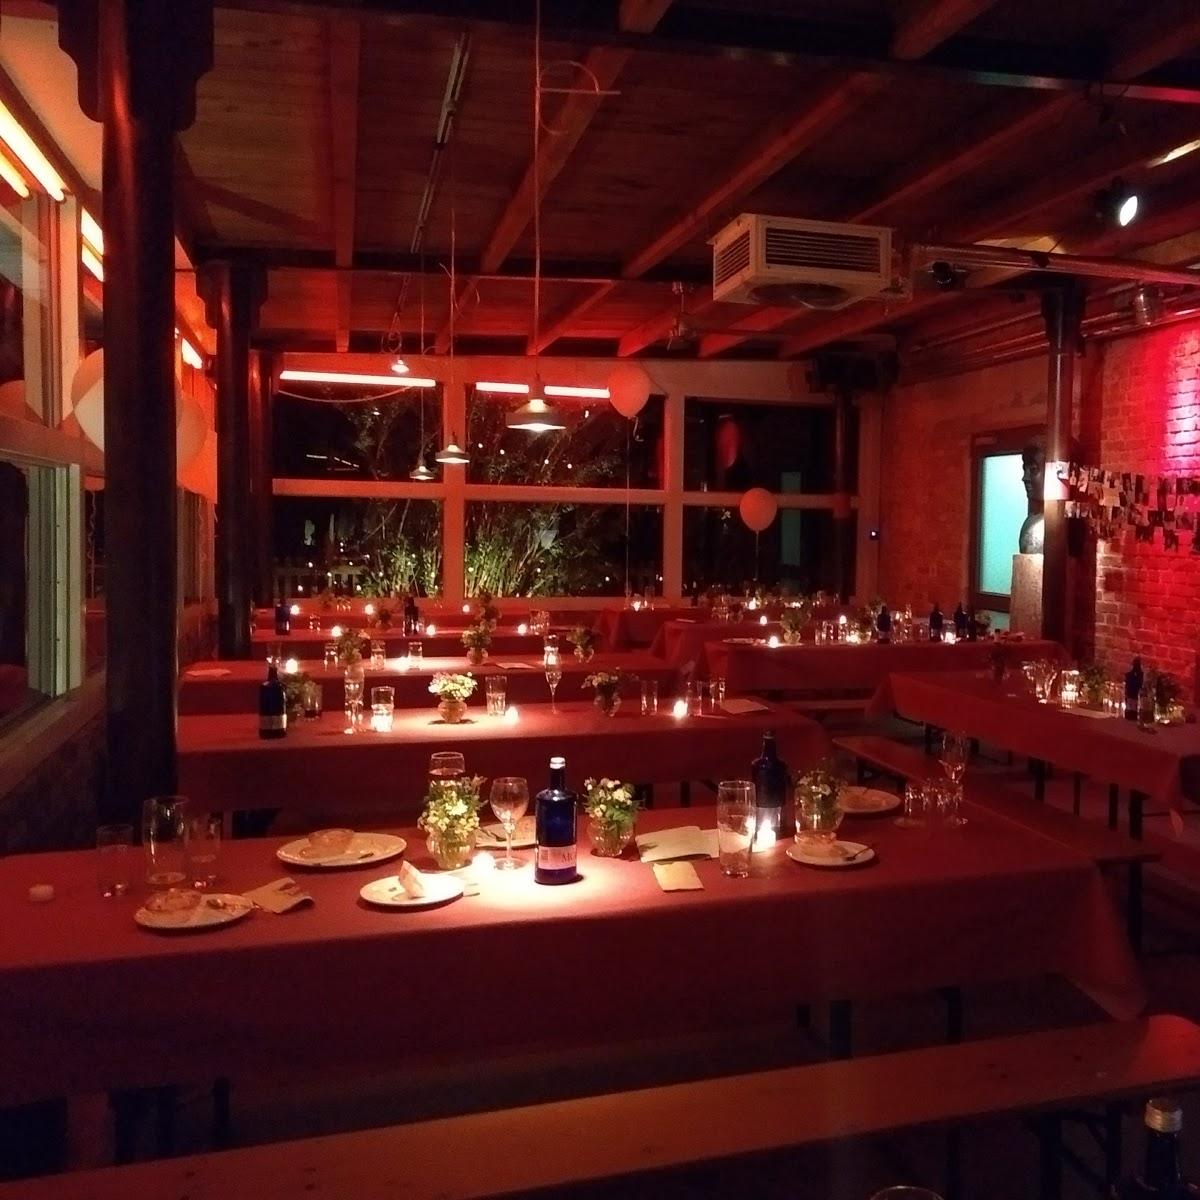 Restaurant "Buddha Bar" in Wörthsee